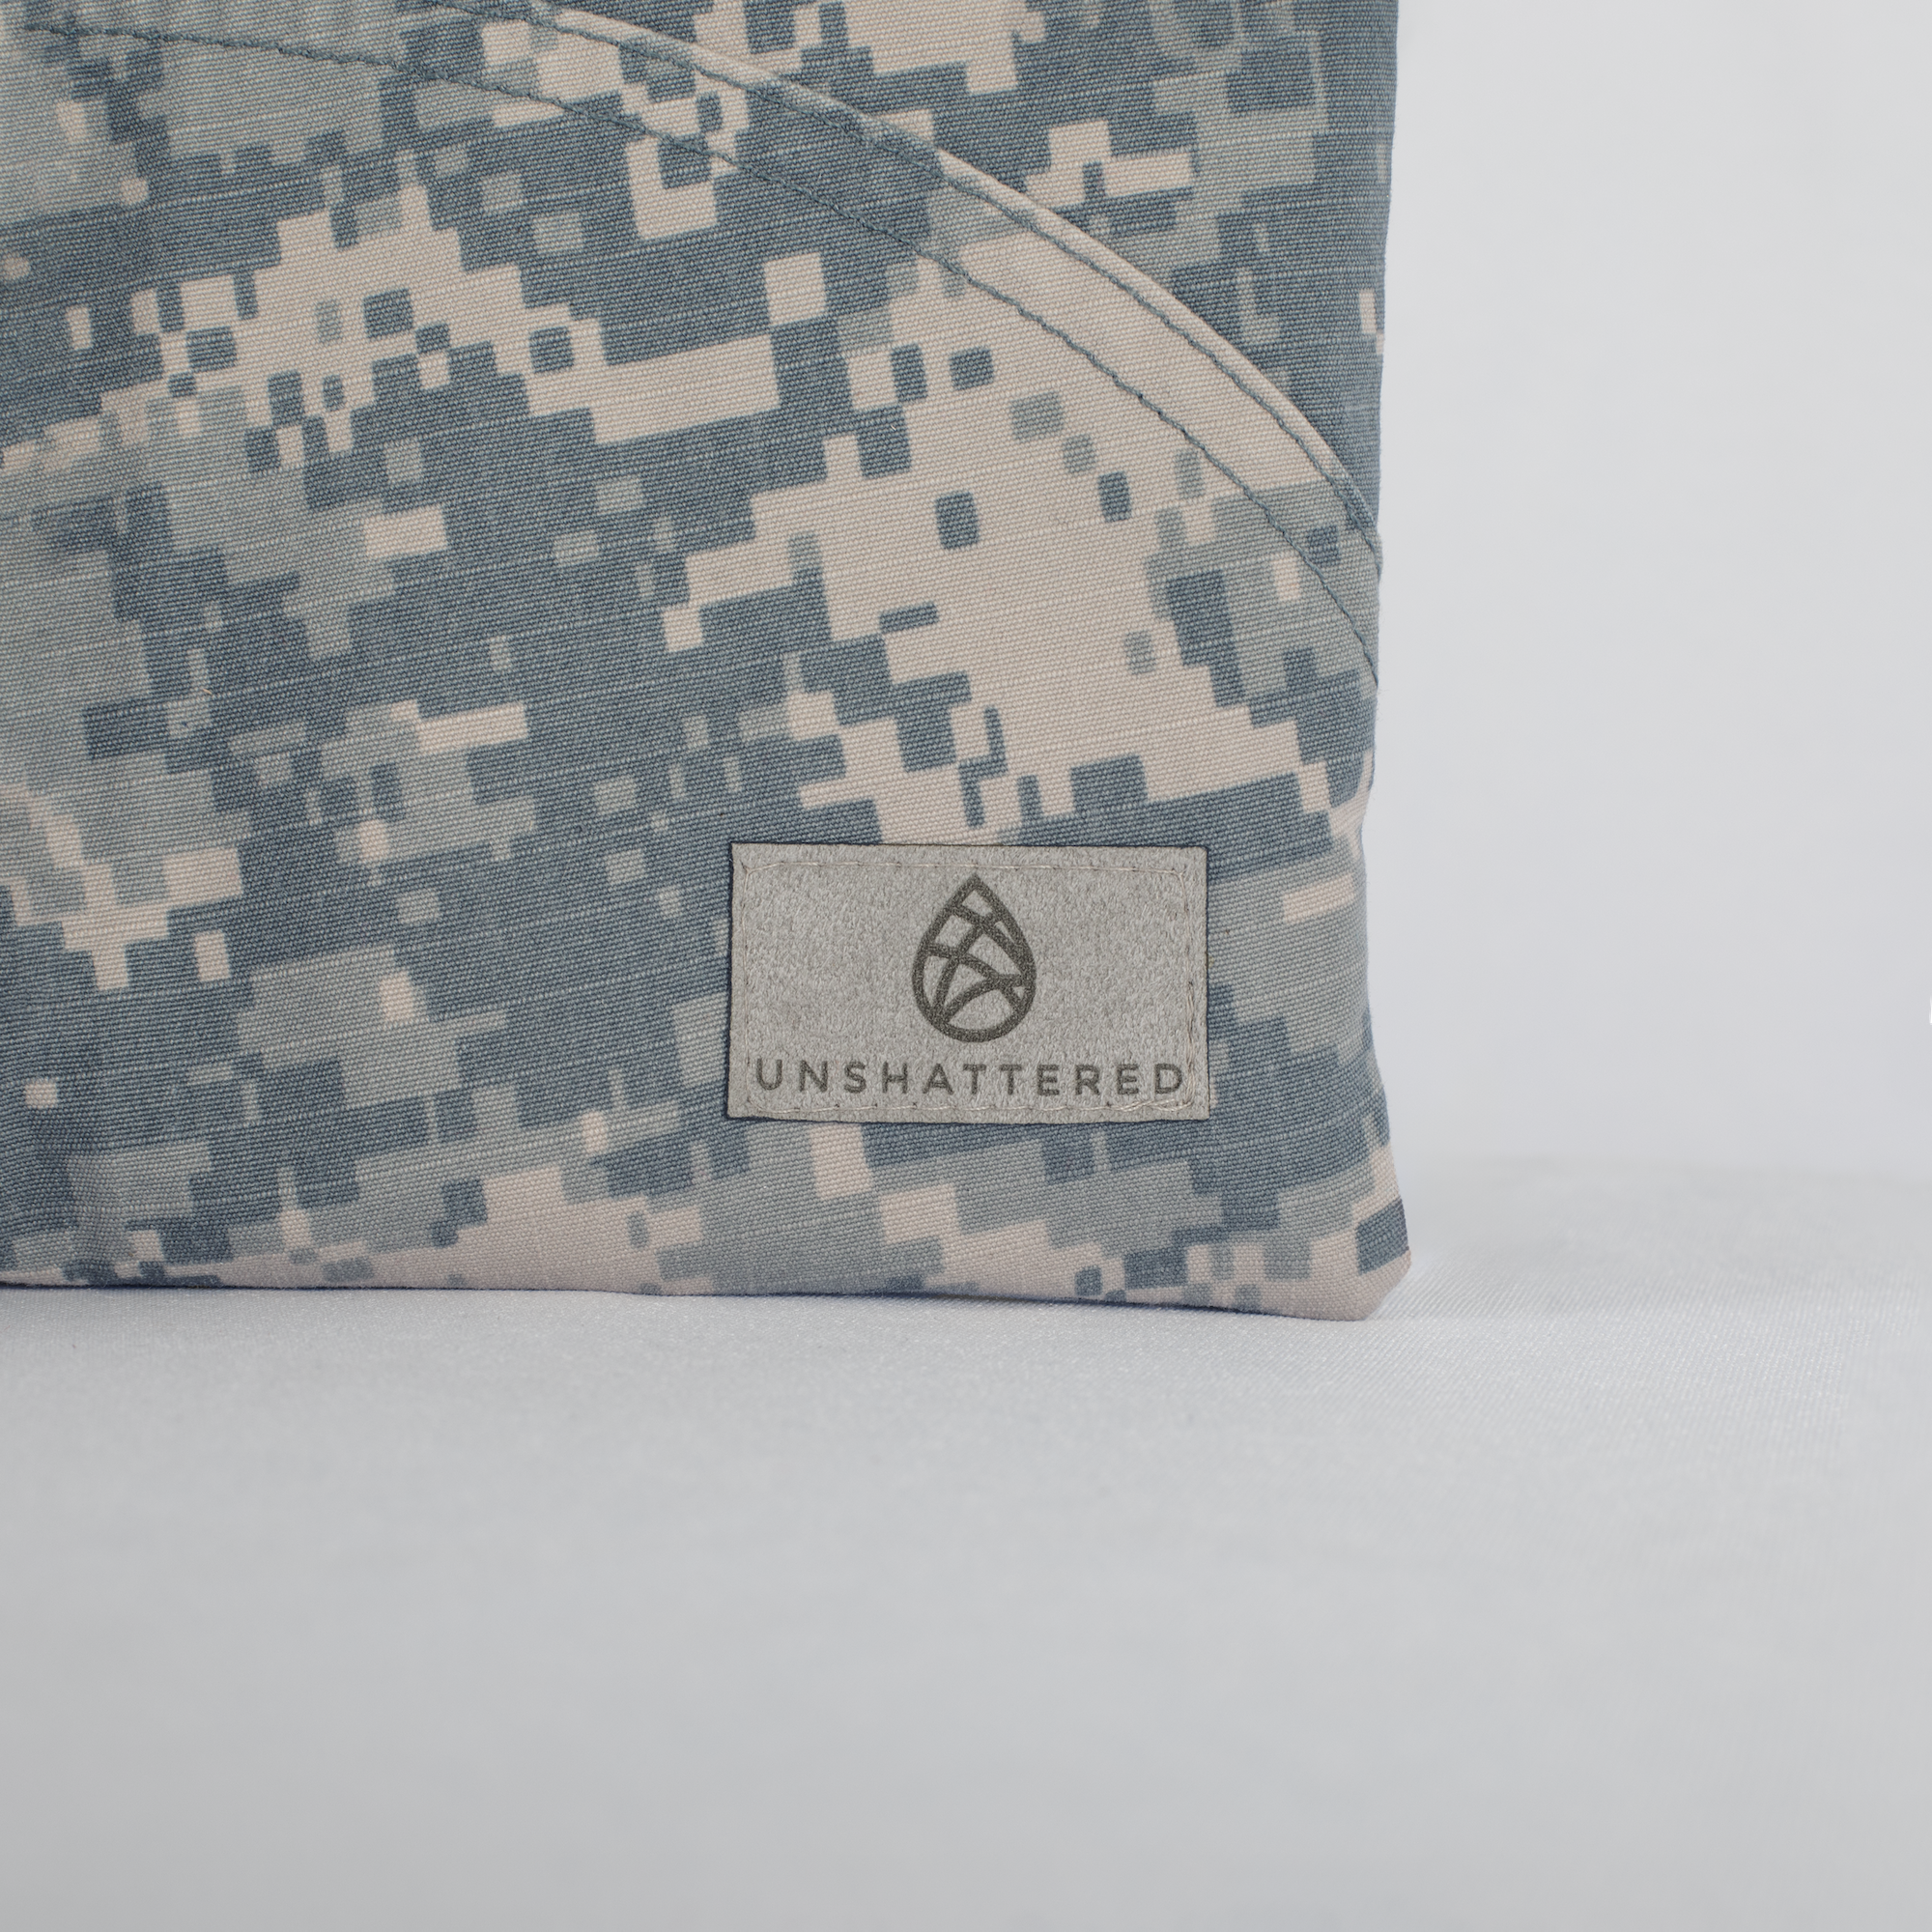 U.S Army label on crossbody